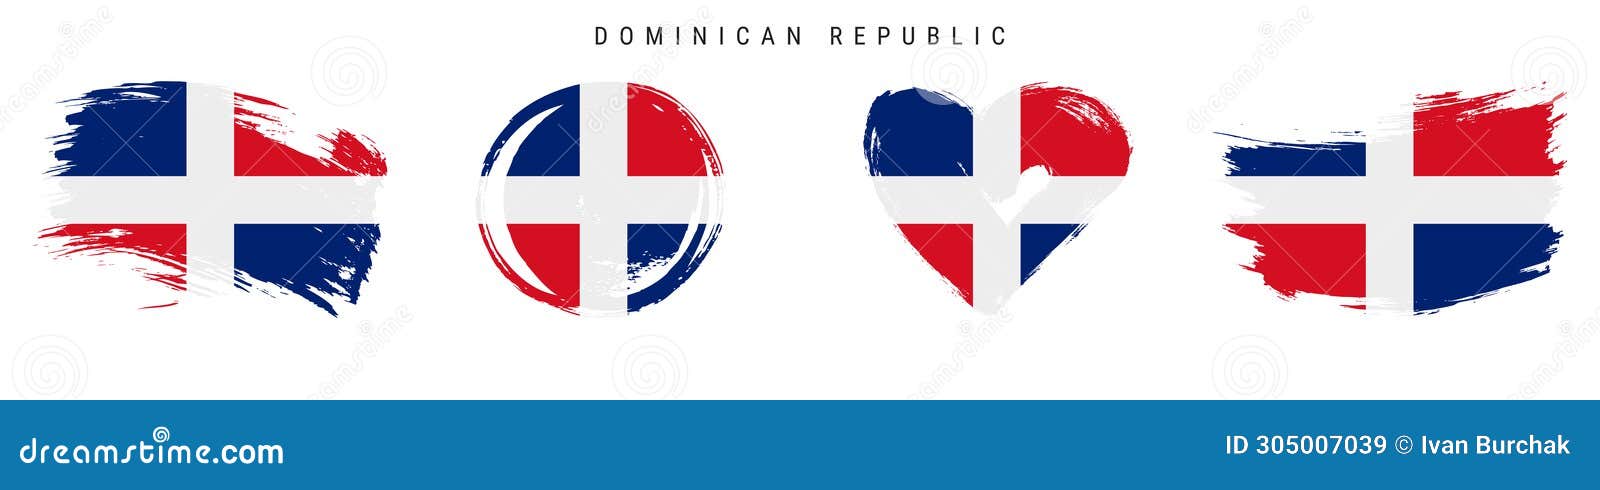 dominican republic hand drawn grunge style flag icon set. free brush stroke flat    on white